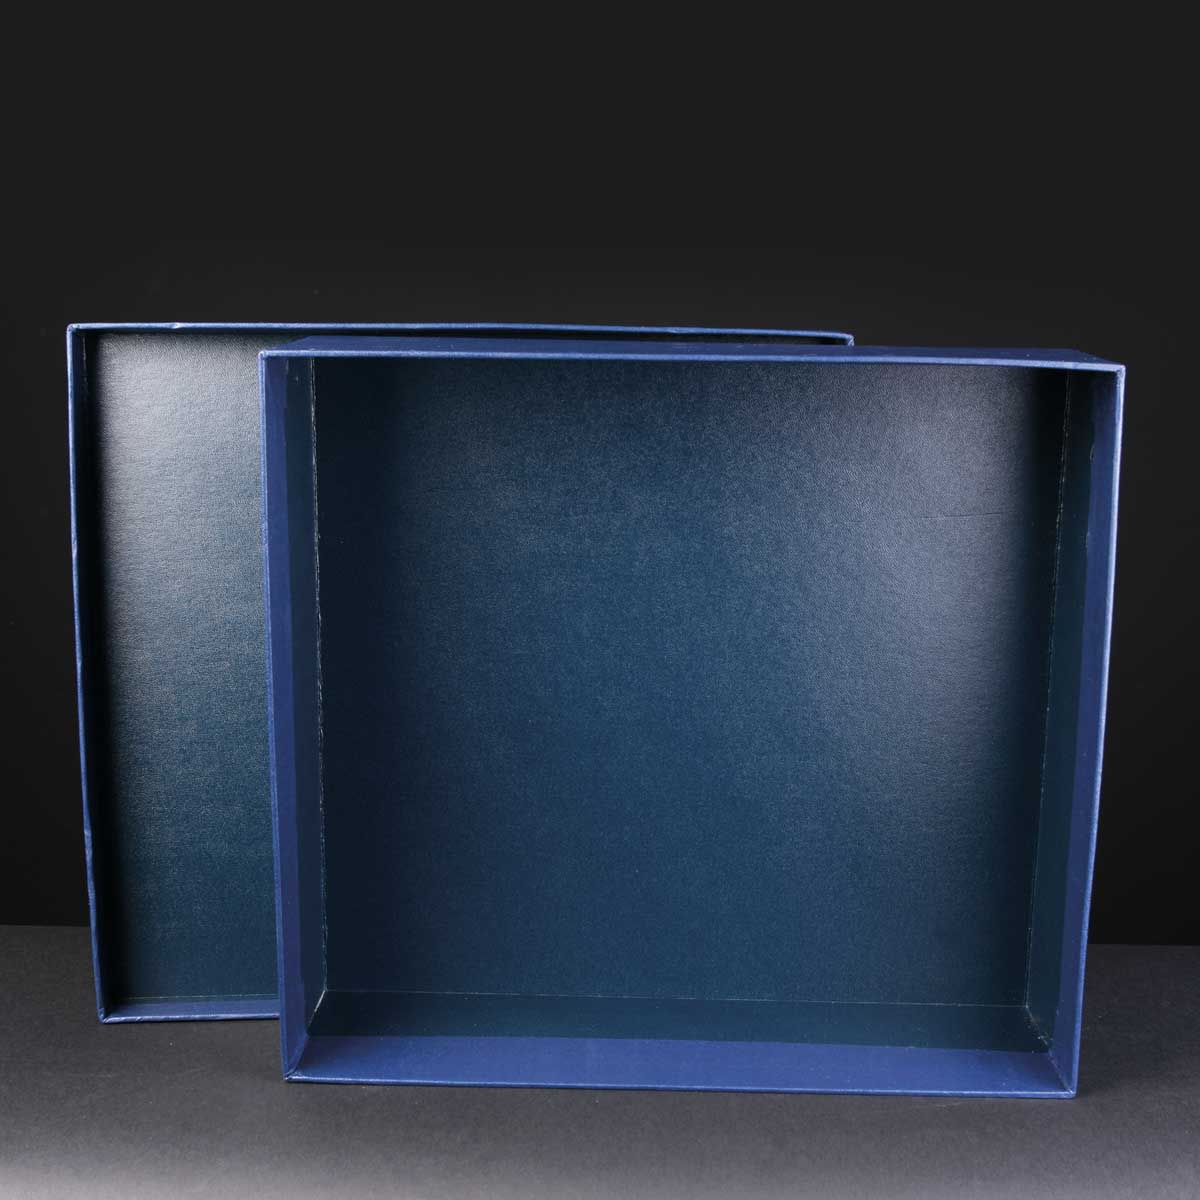 Award Box No Compartments 12.7x11.75x4 inches, Single, White Sleeve